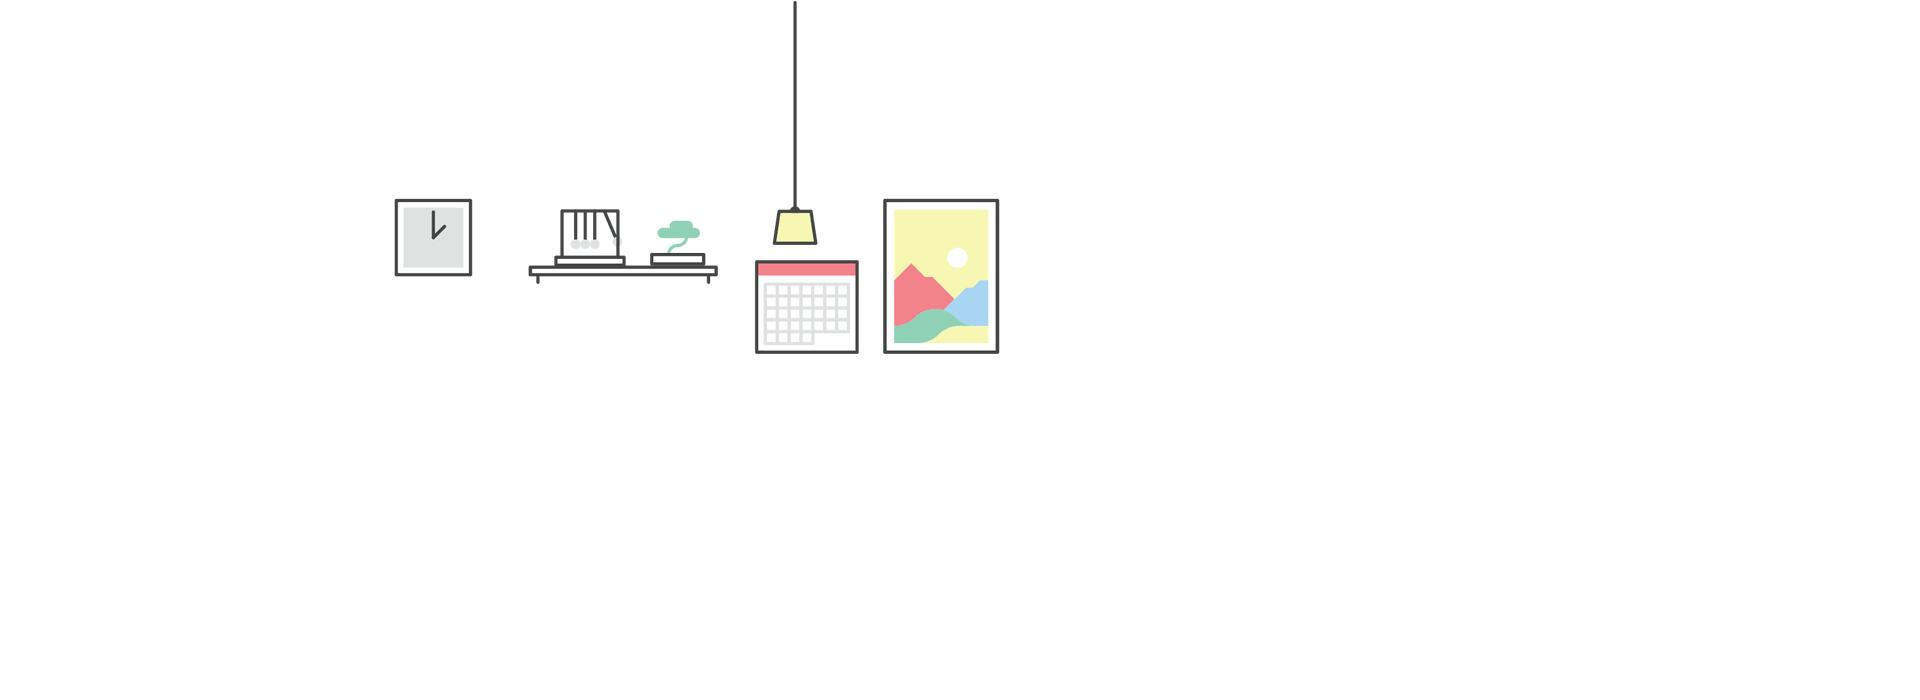 Office Desk, Laptop, Calendar, Clock, and Picture Graphic Element